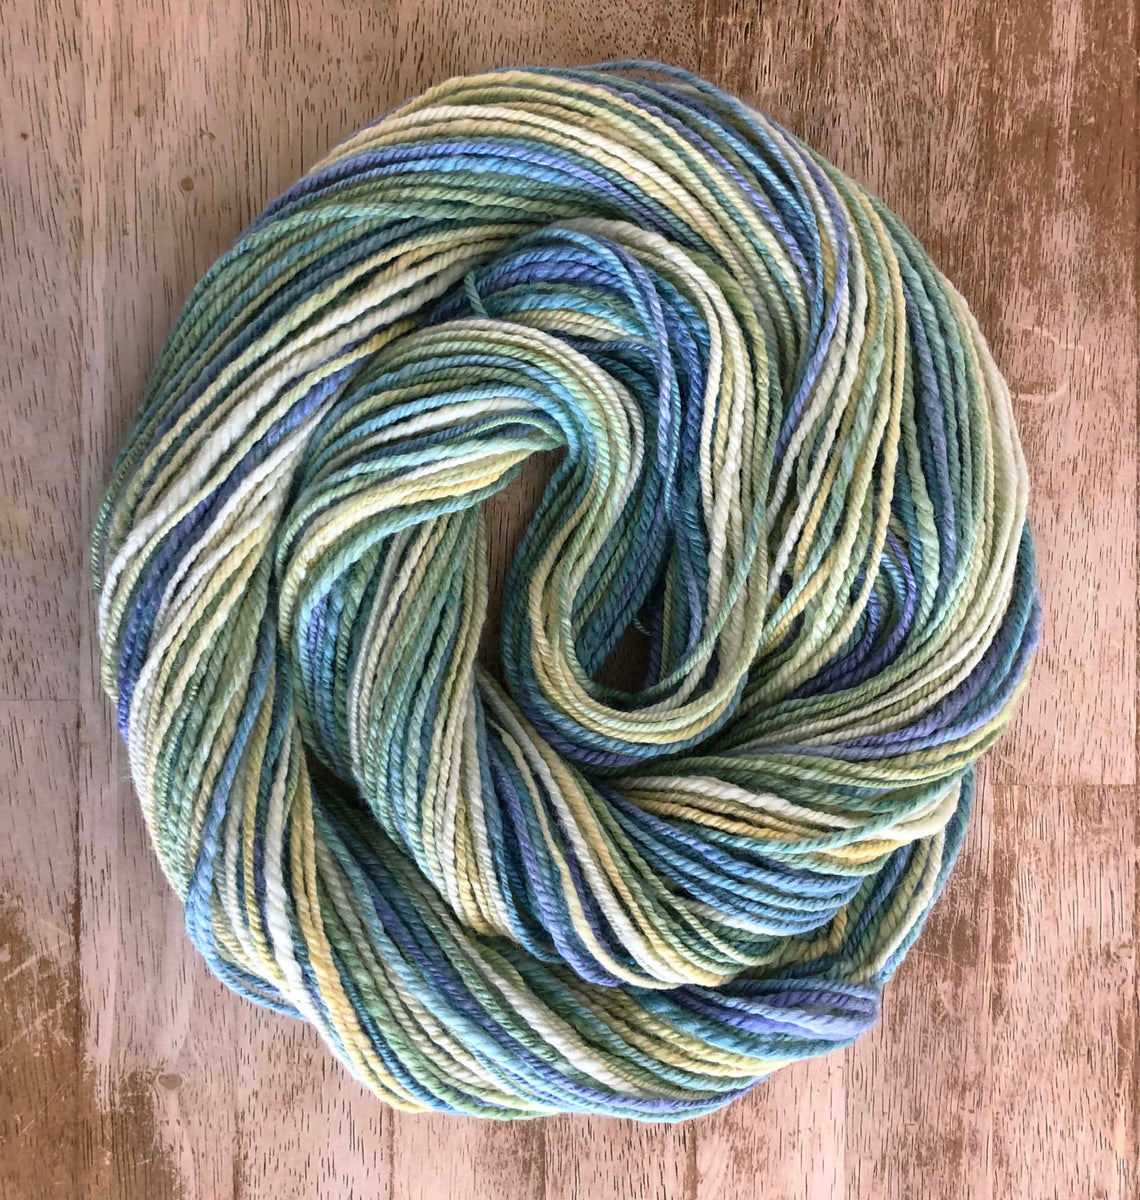 Plying Spindle Spun Yarn - knittyBlog